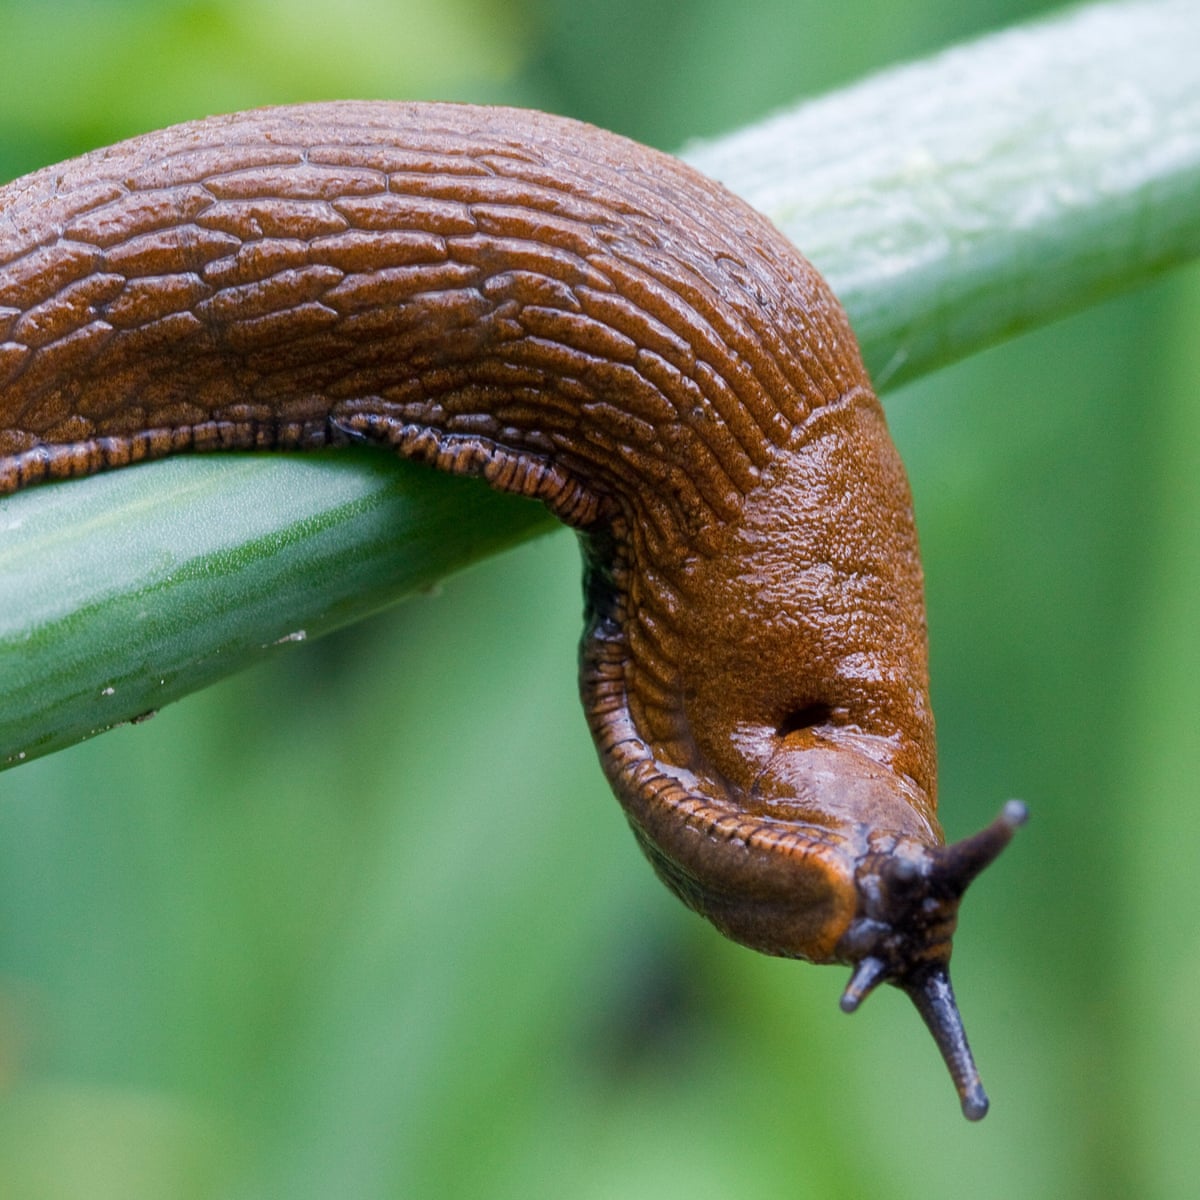 Misunderstood molluscs: five reasons to love slugs | Wildlife | The Guardian